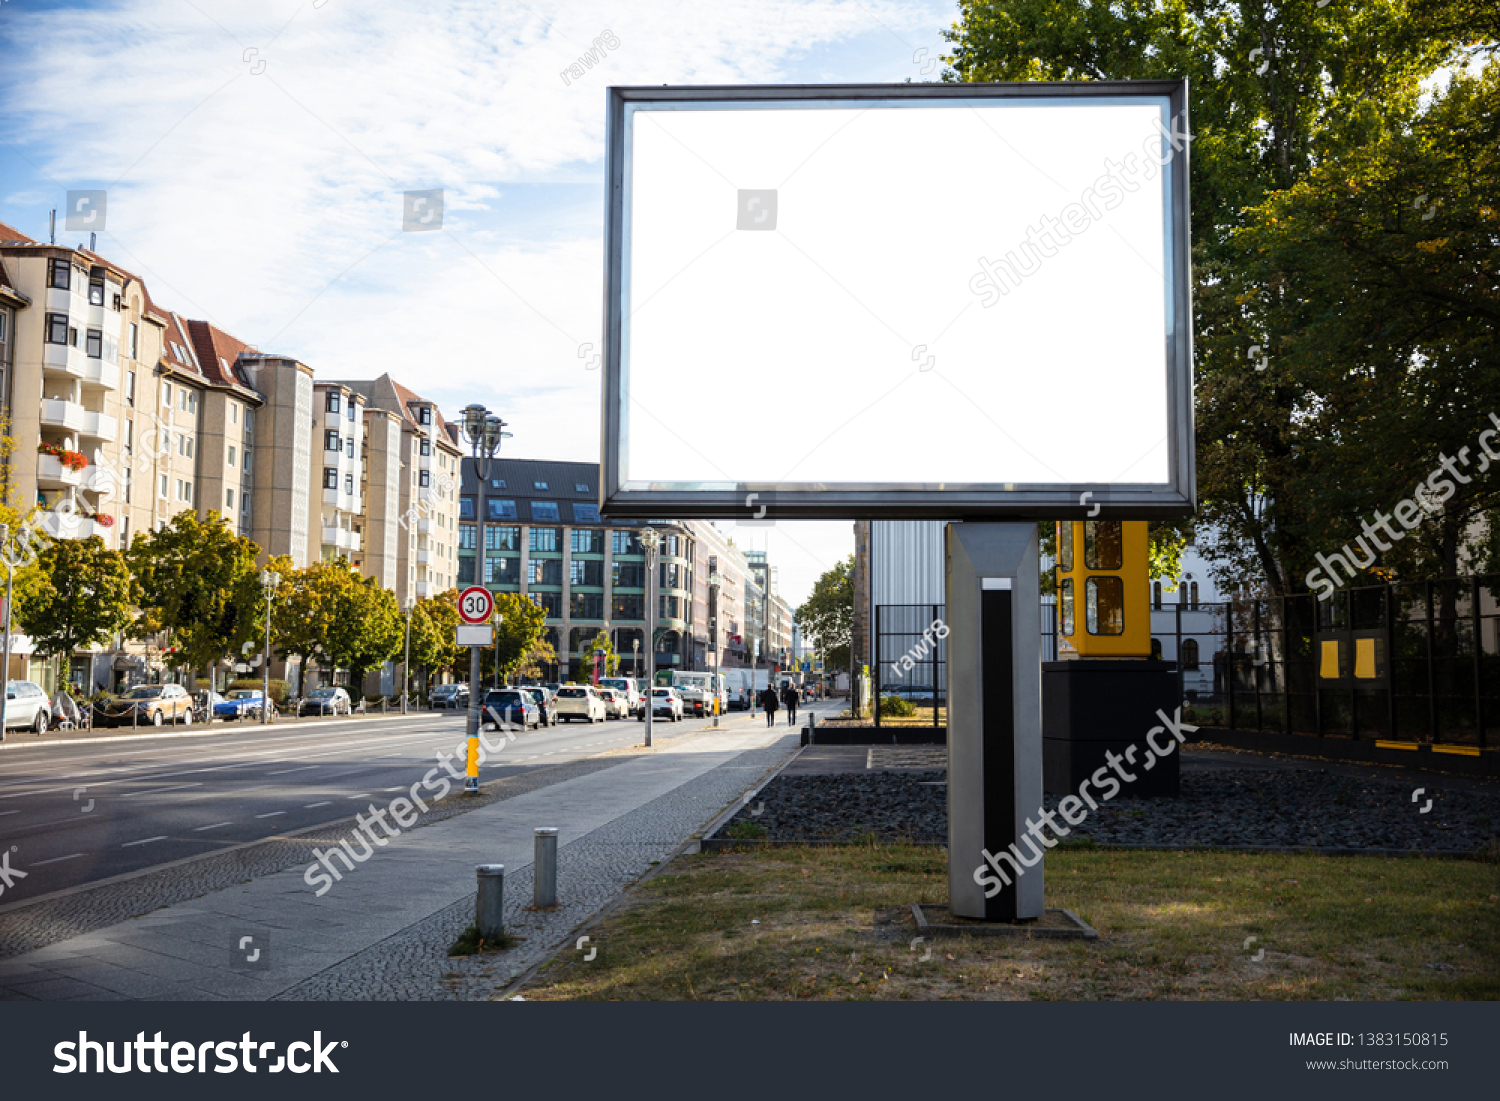 Blank billboard mockup for advertising, City street background #1383150815